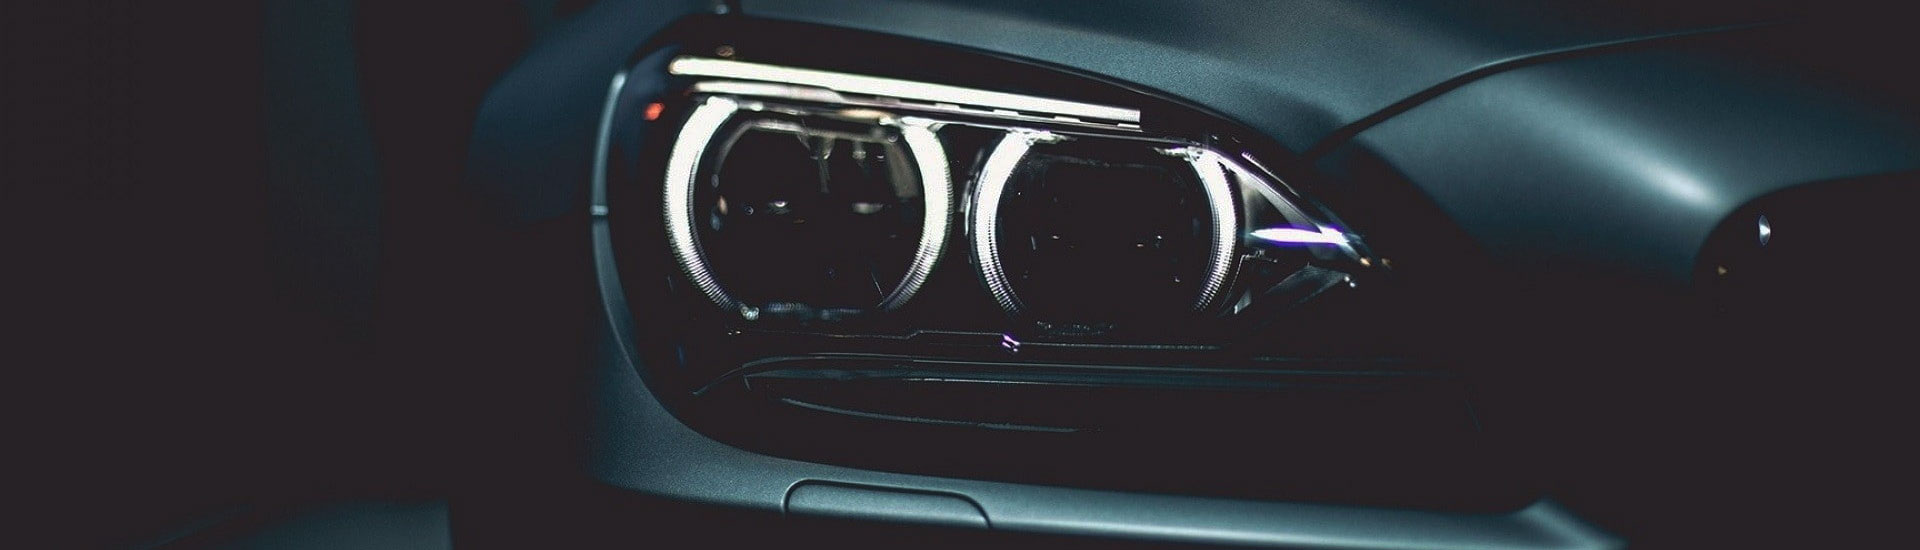 2019 BMW 7-Series Headlight Tint Covers